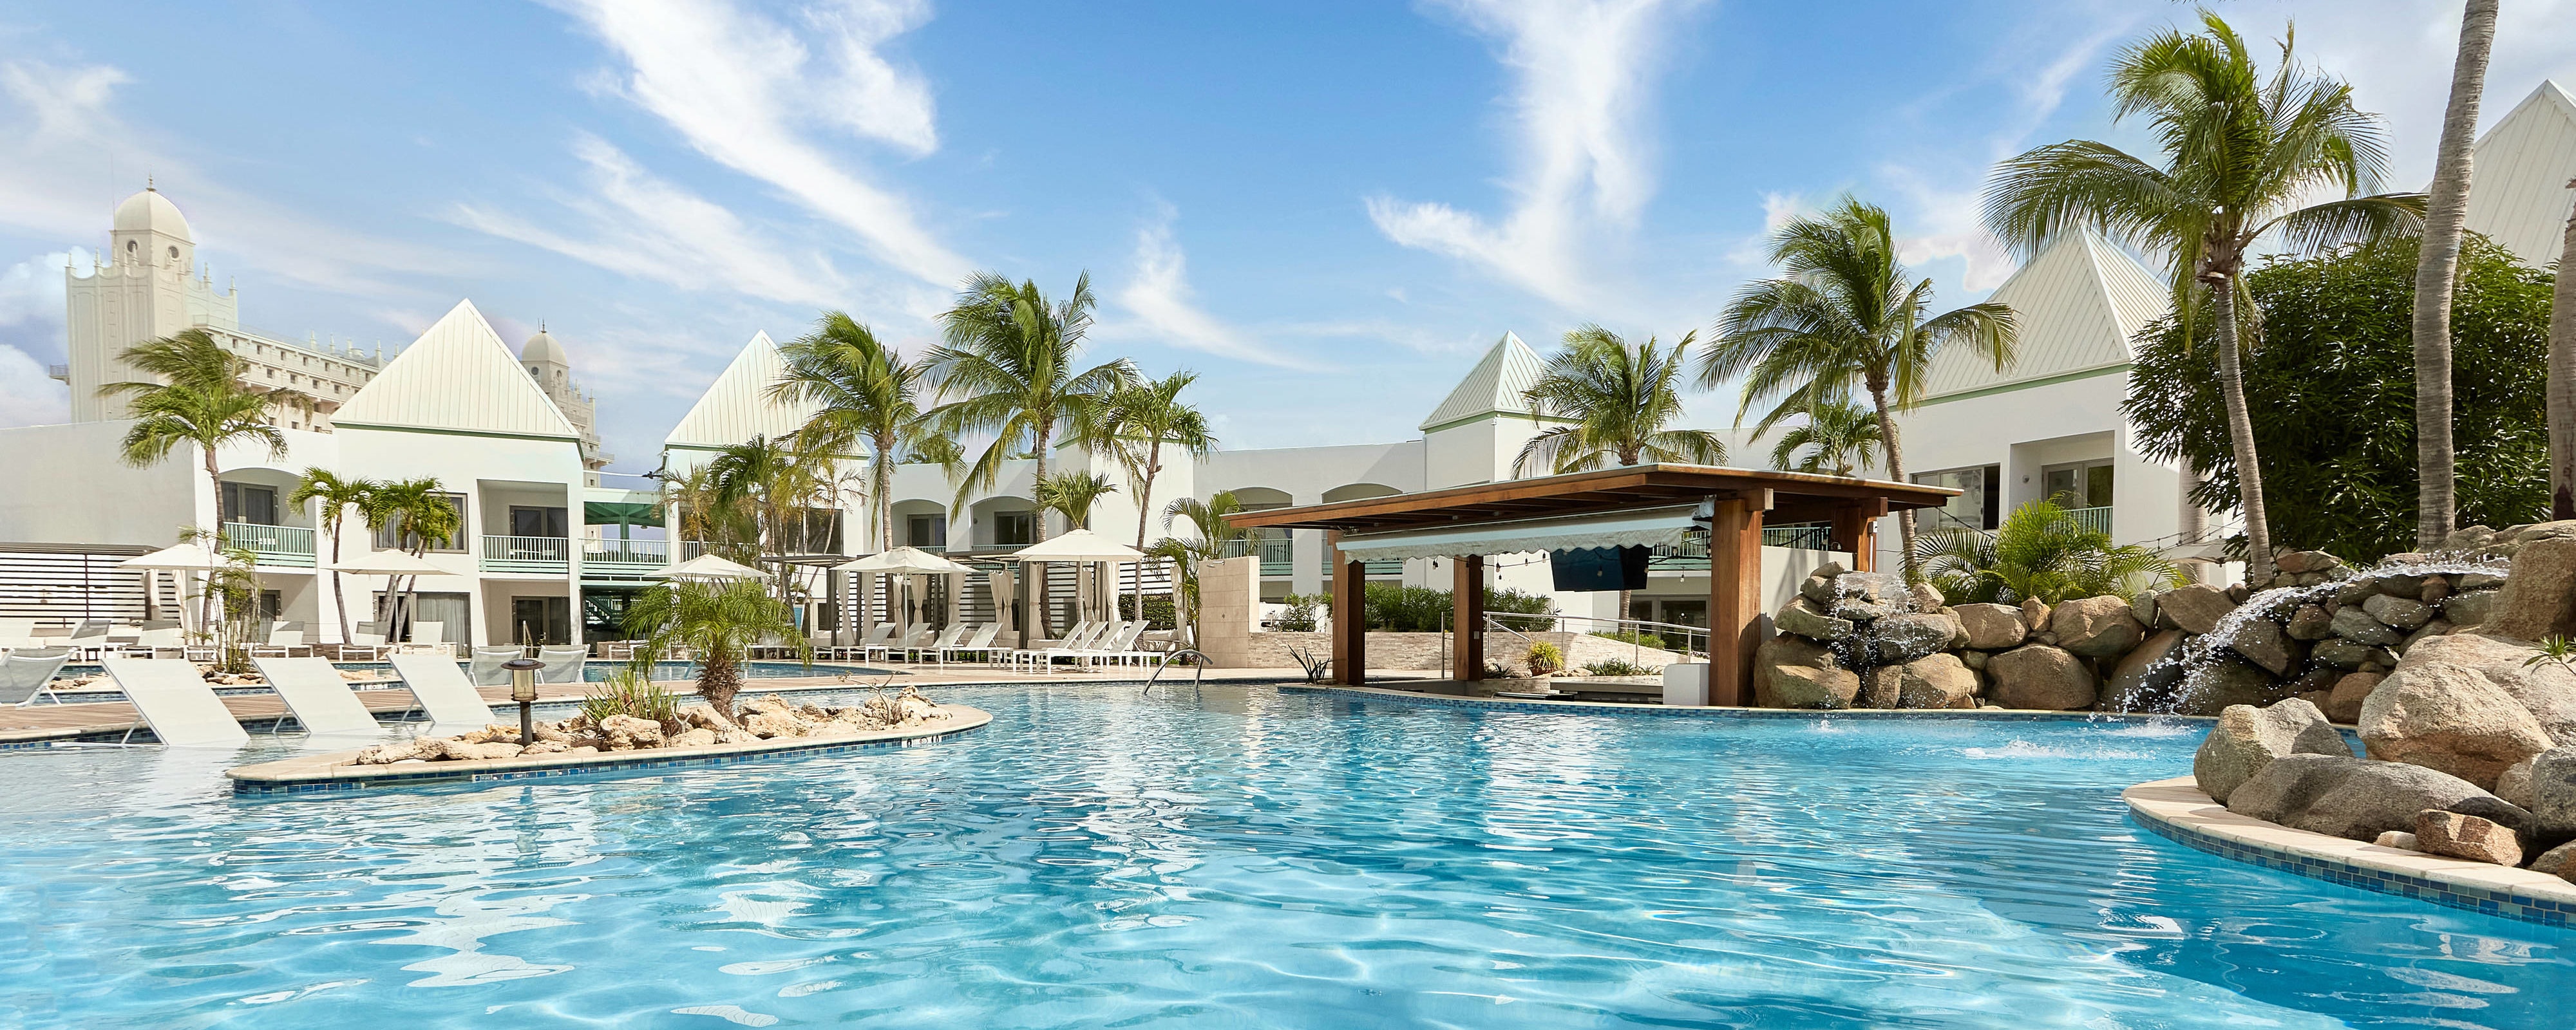 Image for Courtyard Aruba Resort, a Marriott hotel.